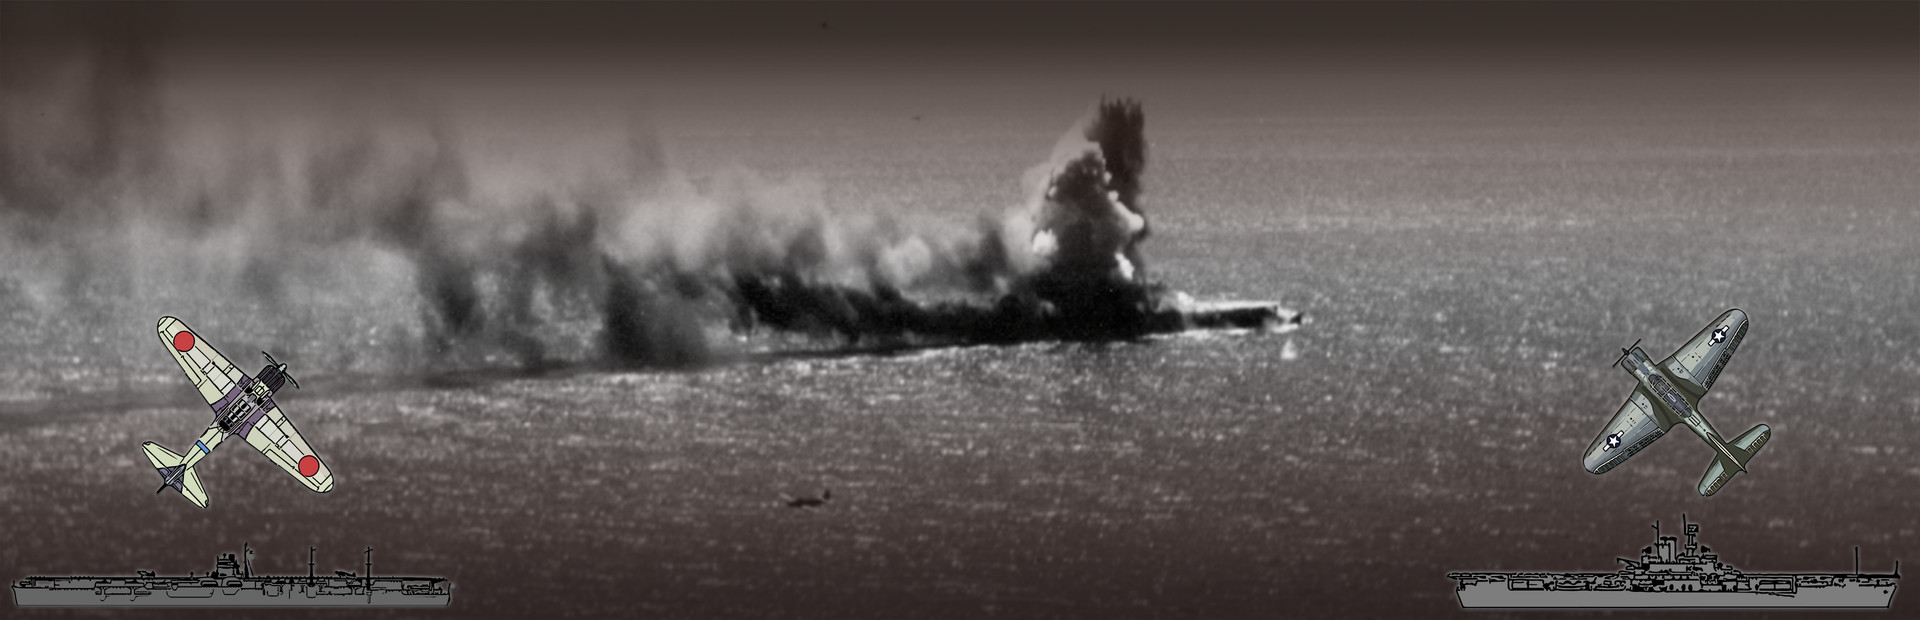 Carrier Battles 4 Guadalcanal - Pacific War Naval Warfare cover image